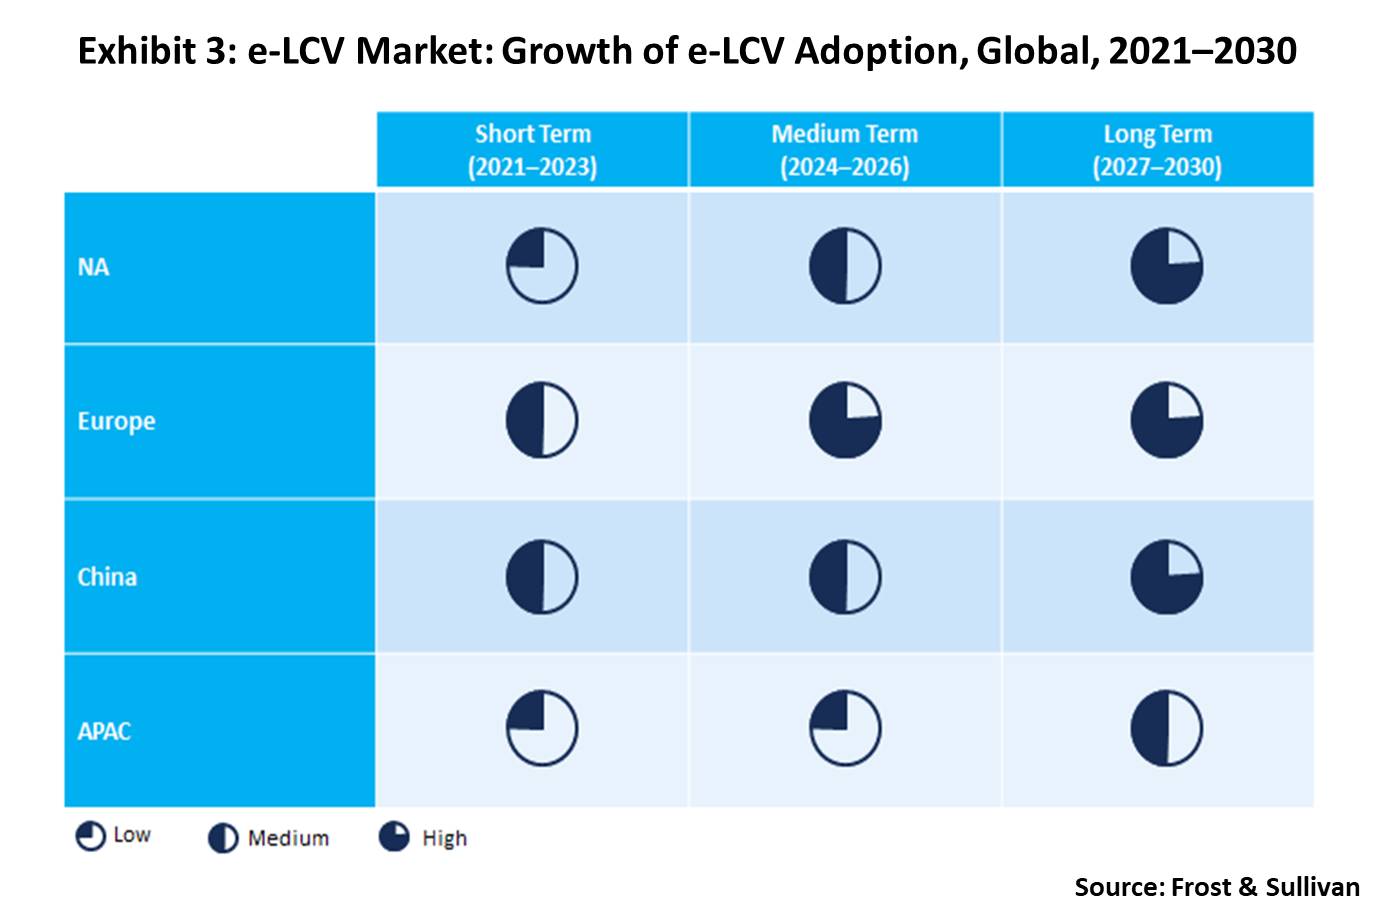 Global e-LCV adoption